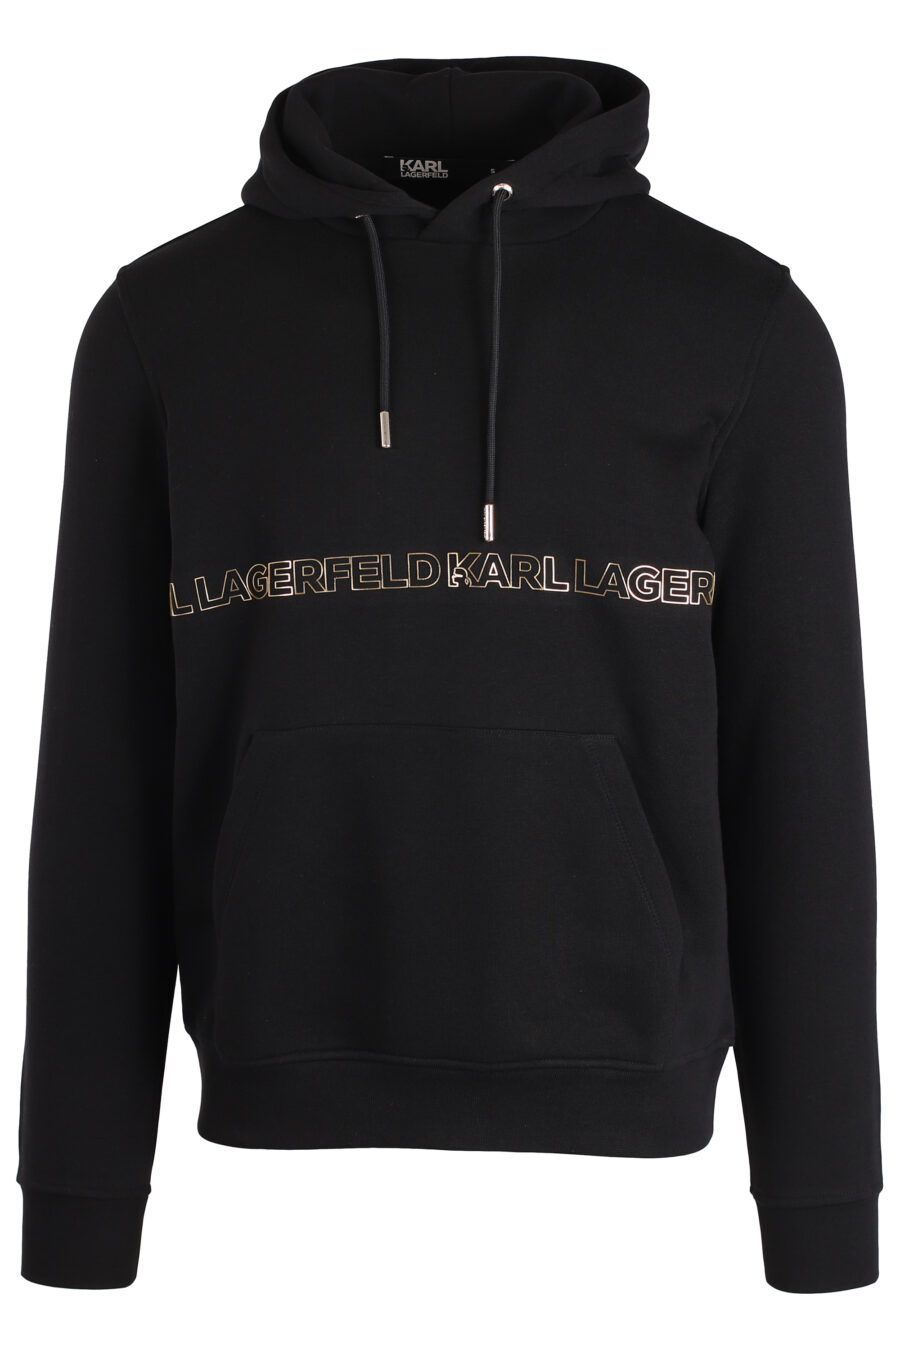 Schwarzes Kapuzensweatshirt mit goldenem Logo an der Taille - IMG 3973